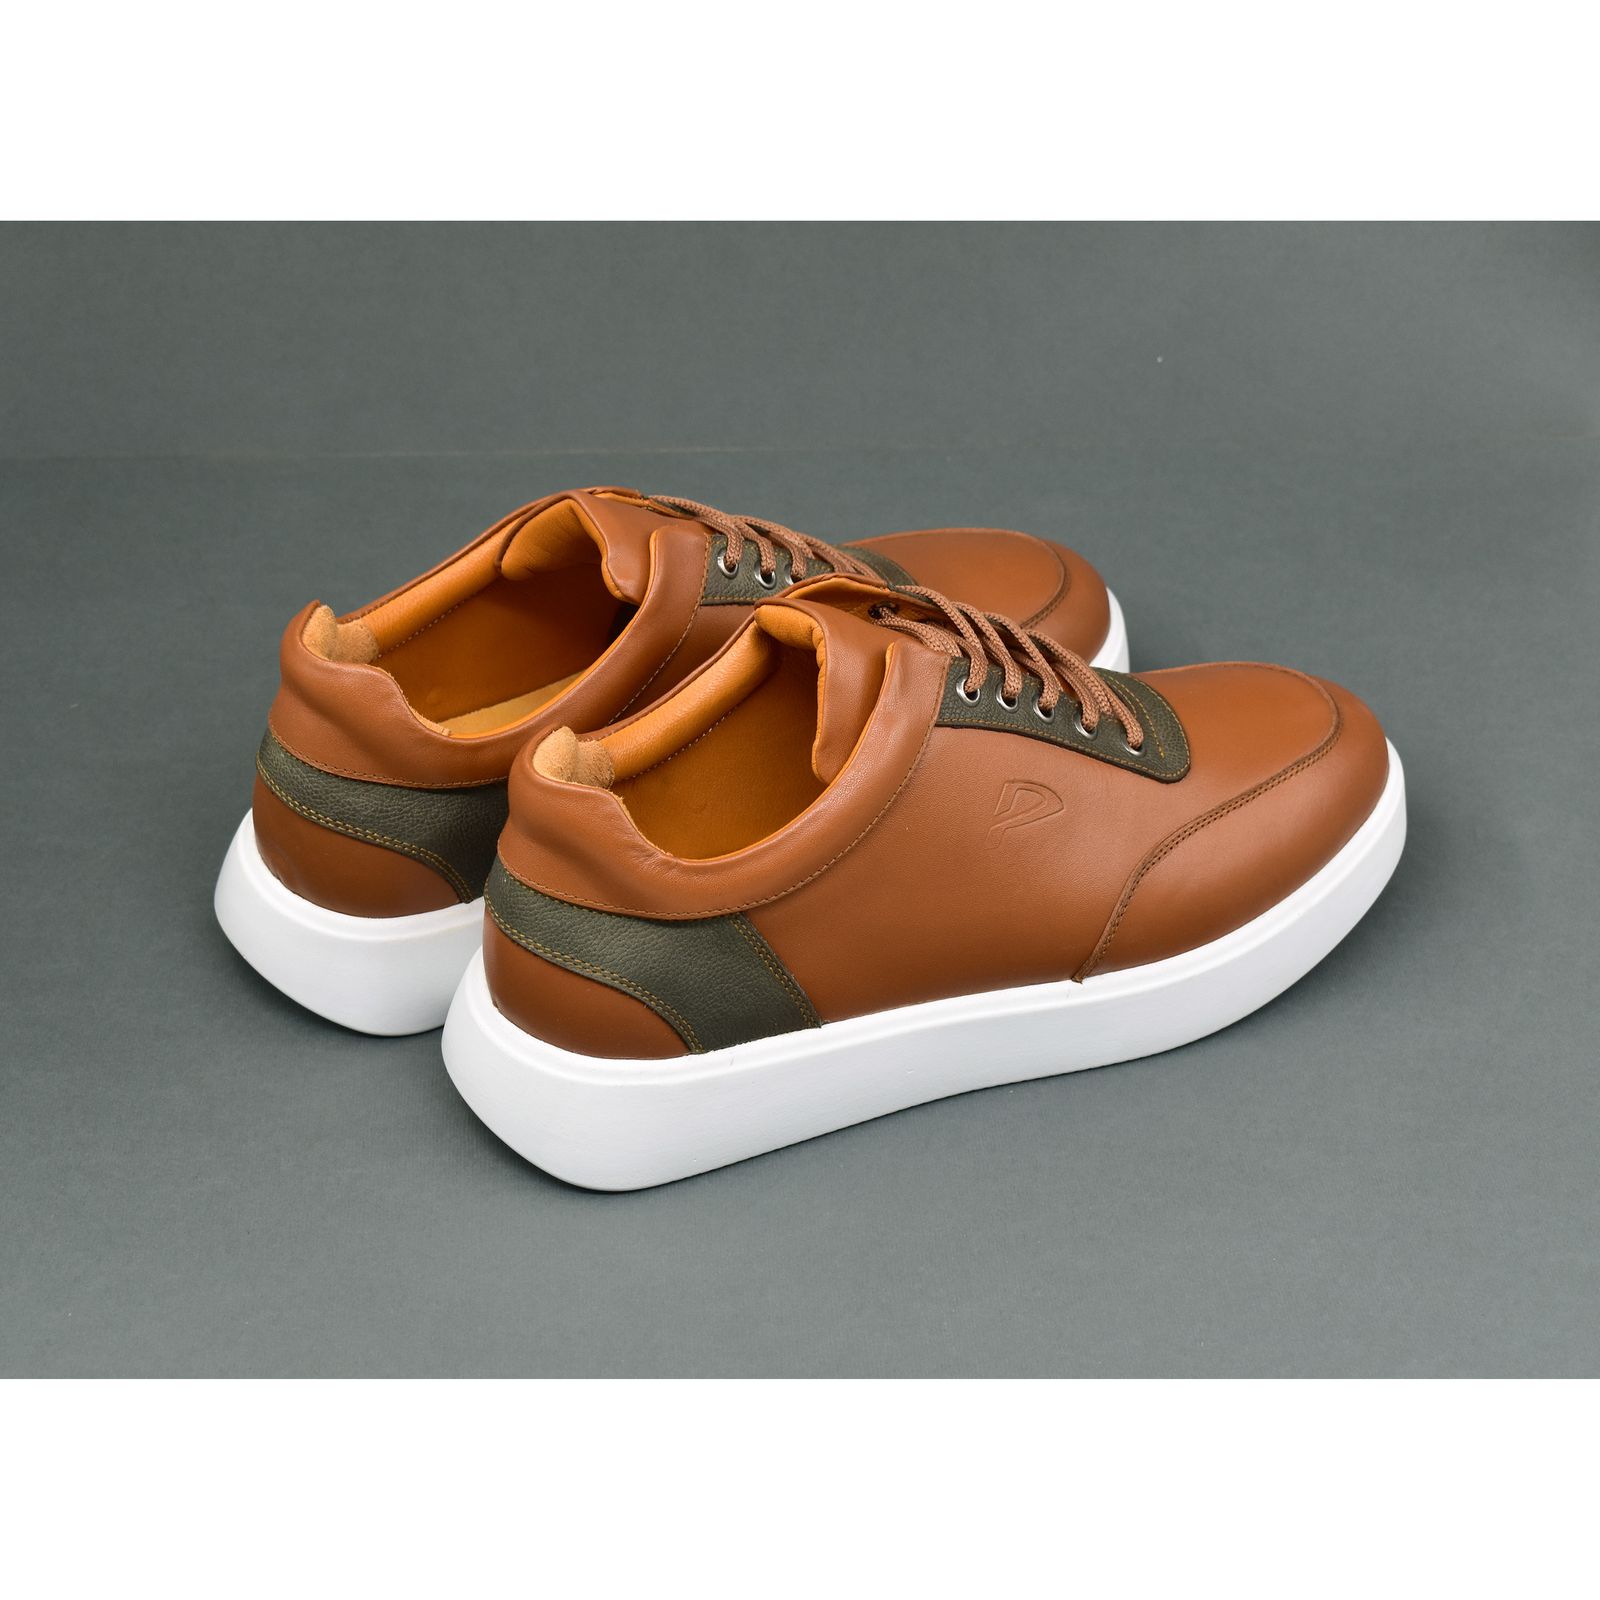 کفش روزمره مردانه پاما مدل ME-403 کد G1806 -  - 4